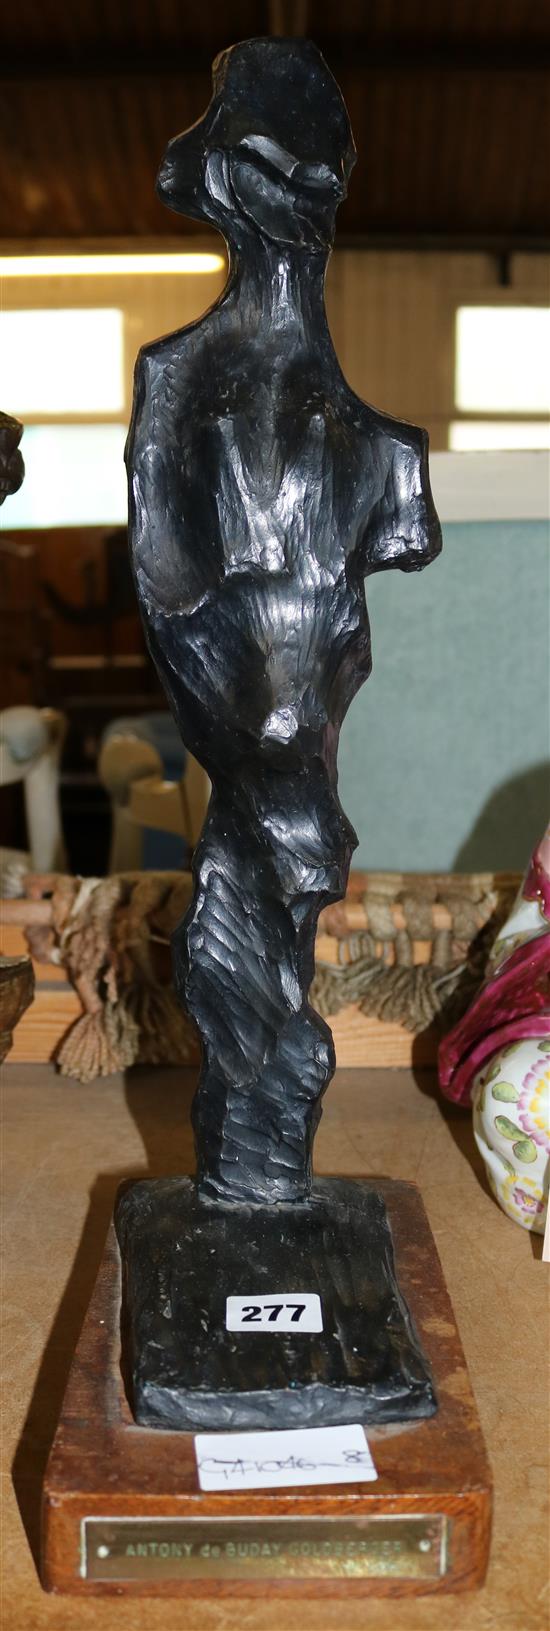 Wooden sculpture figure